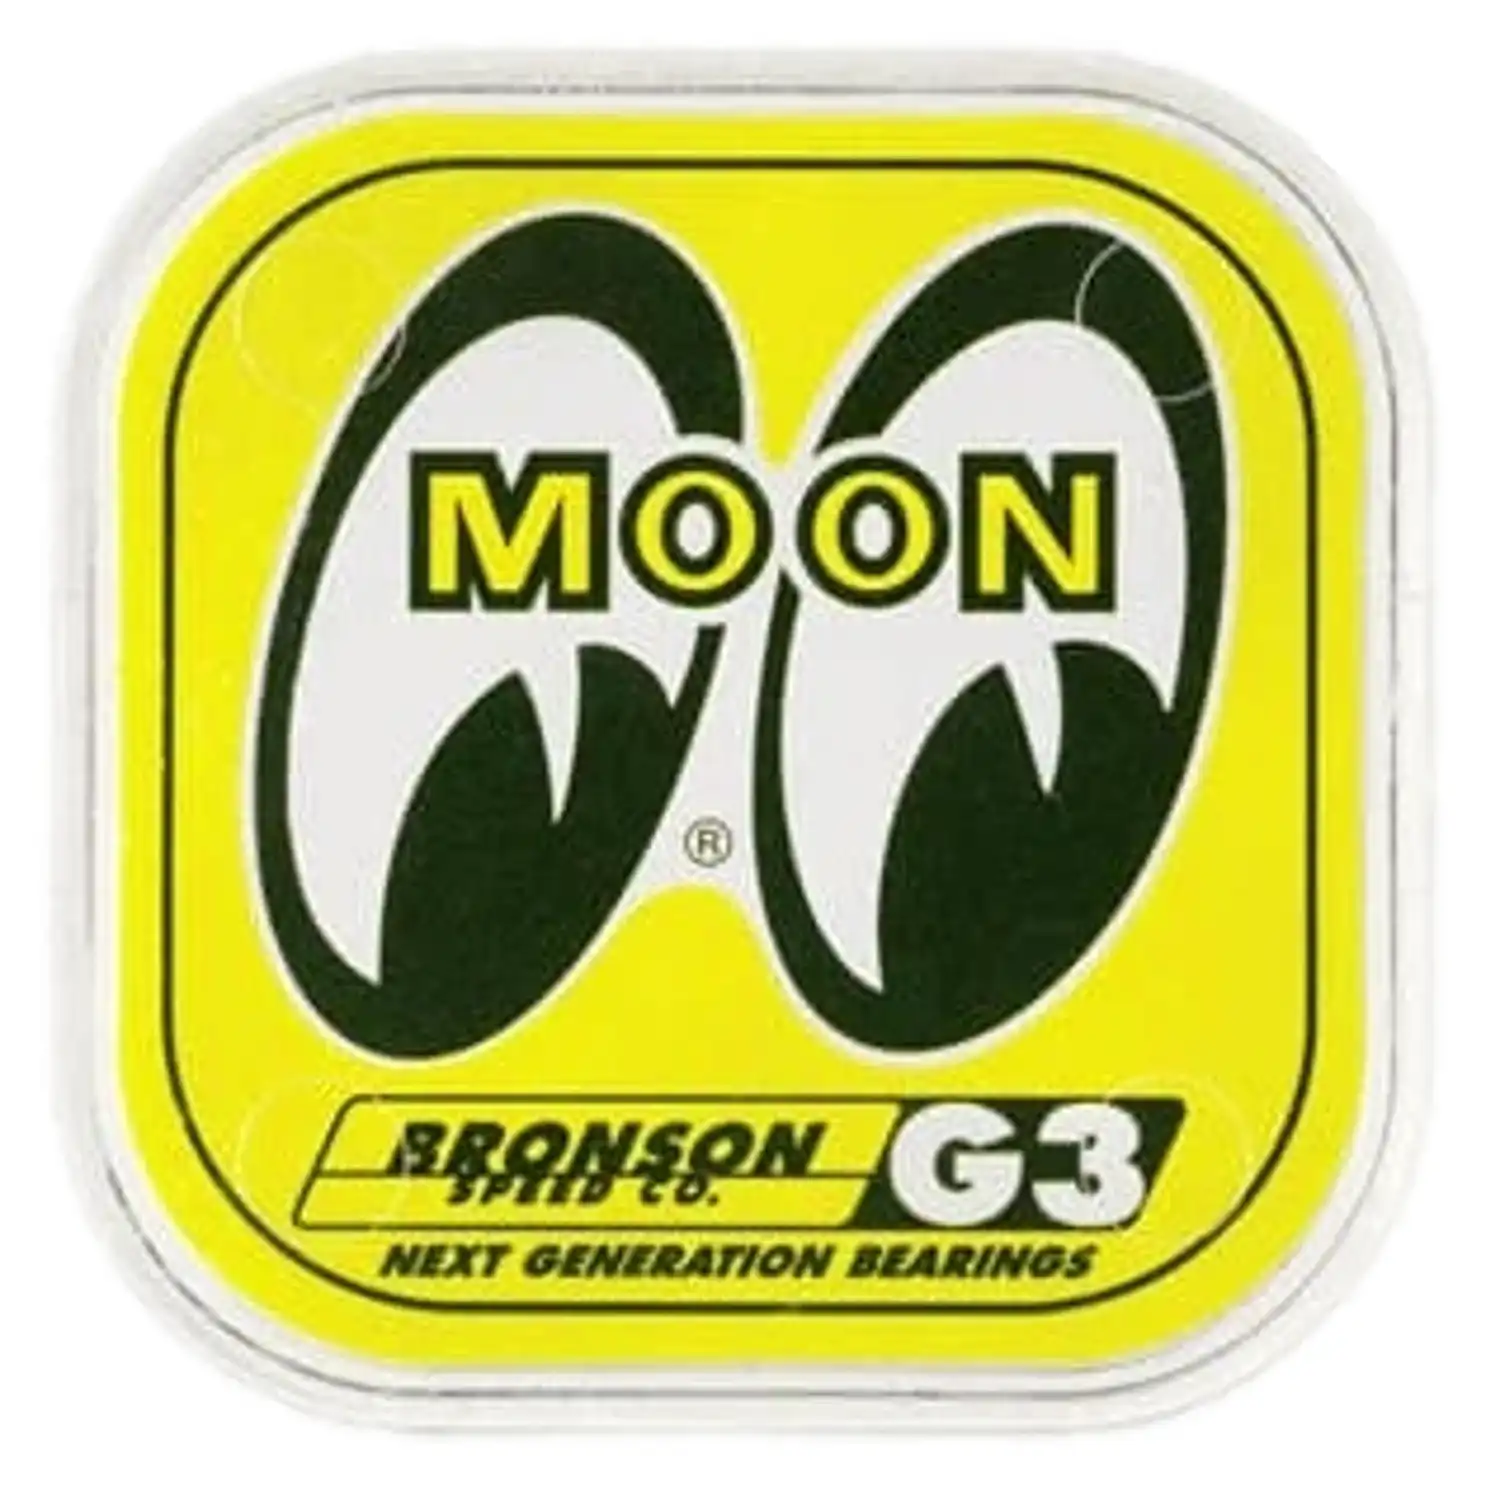 Bronson Cuscinetti G3 Moon